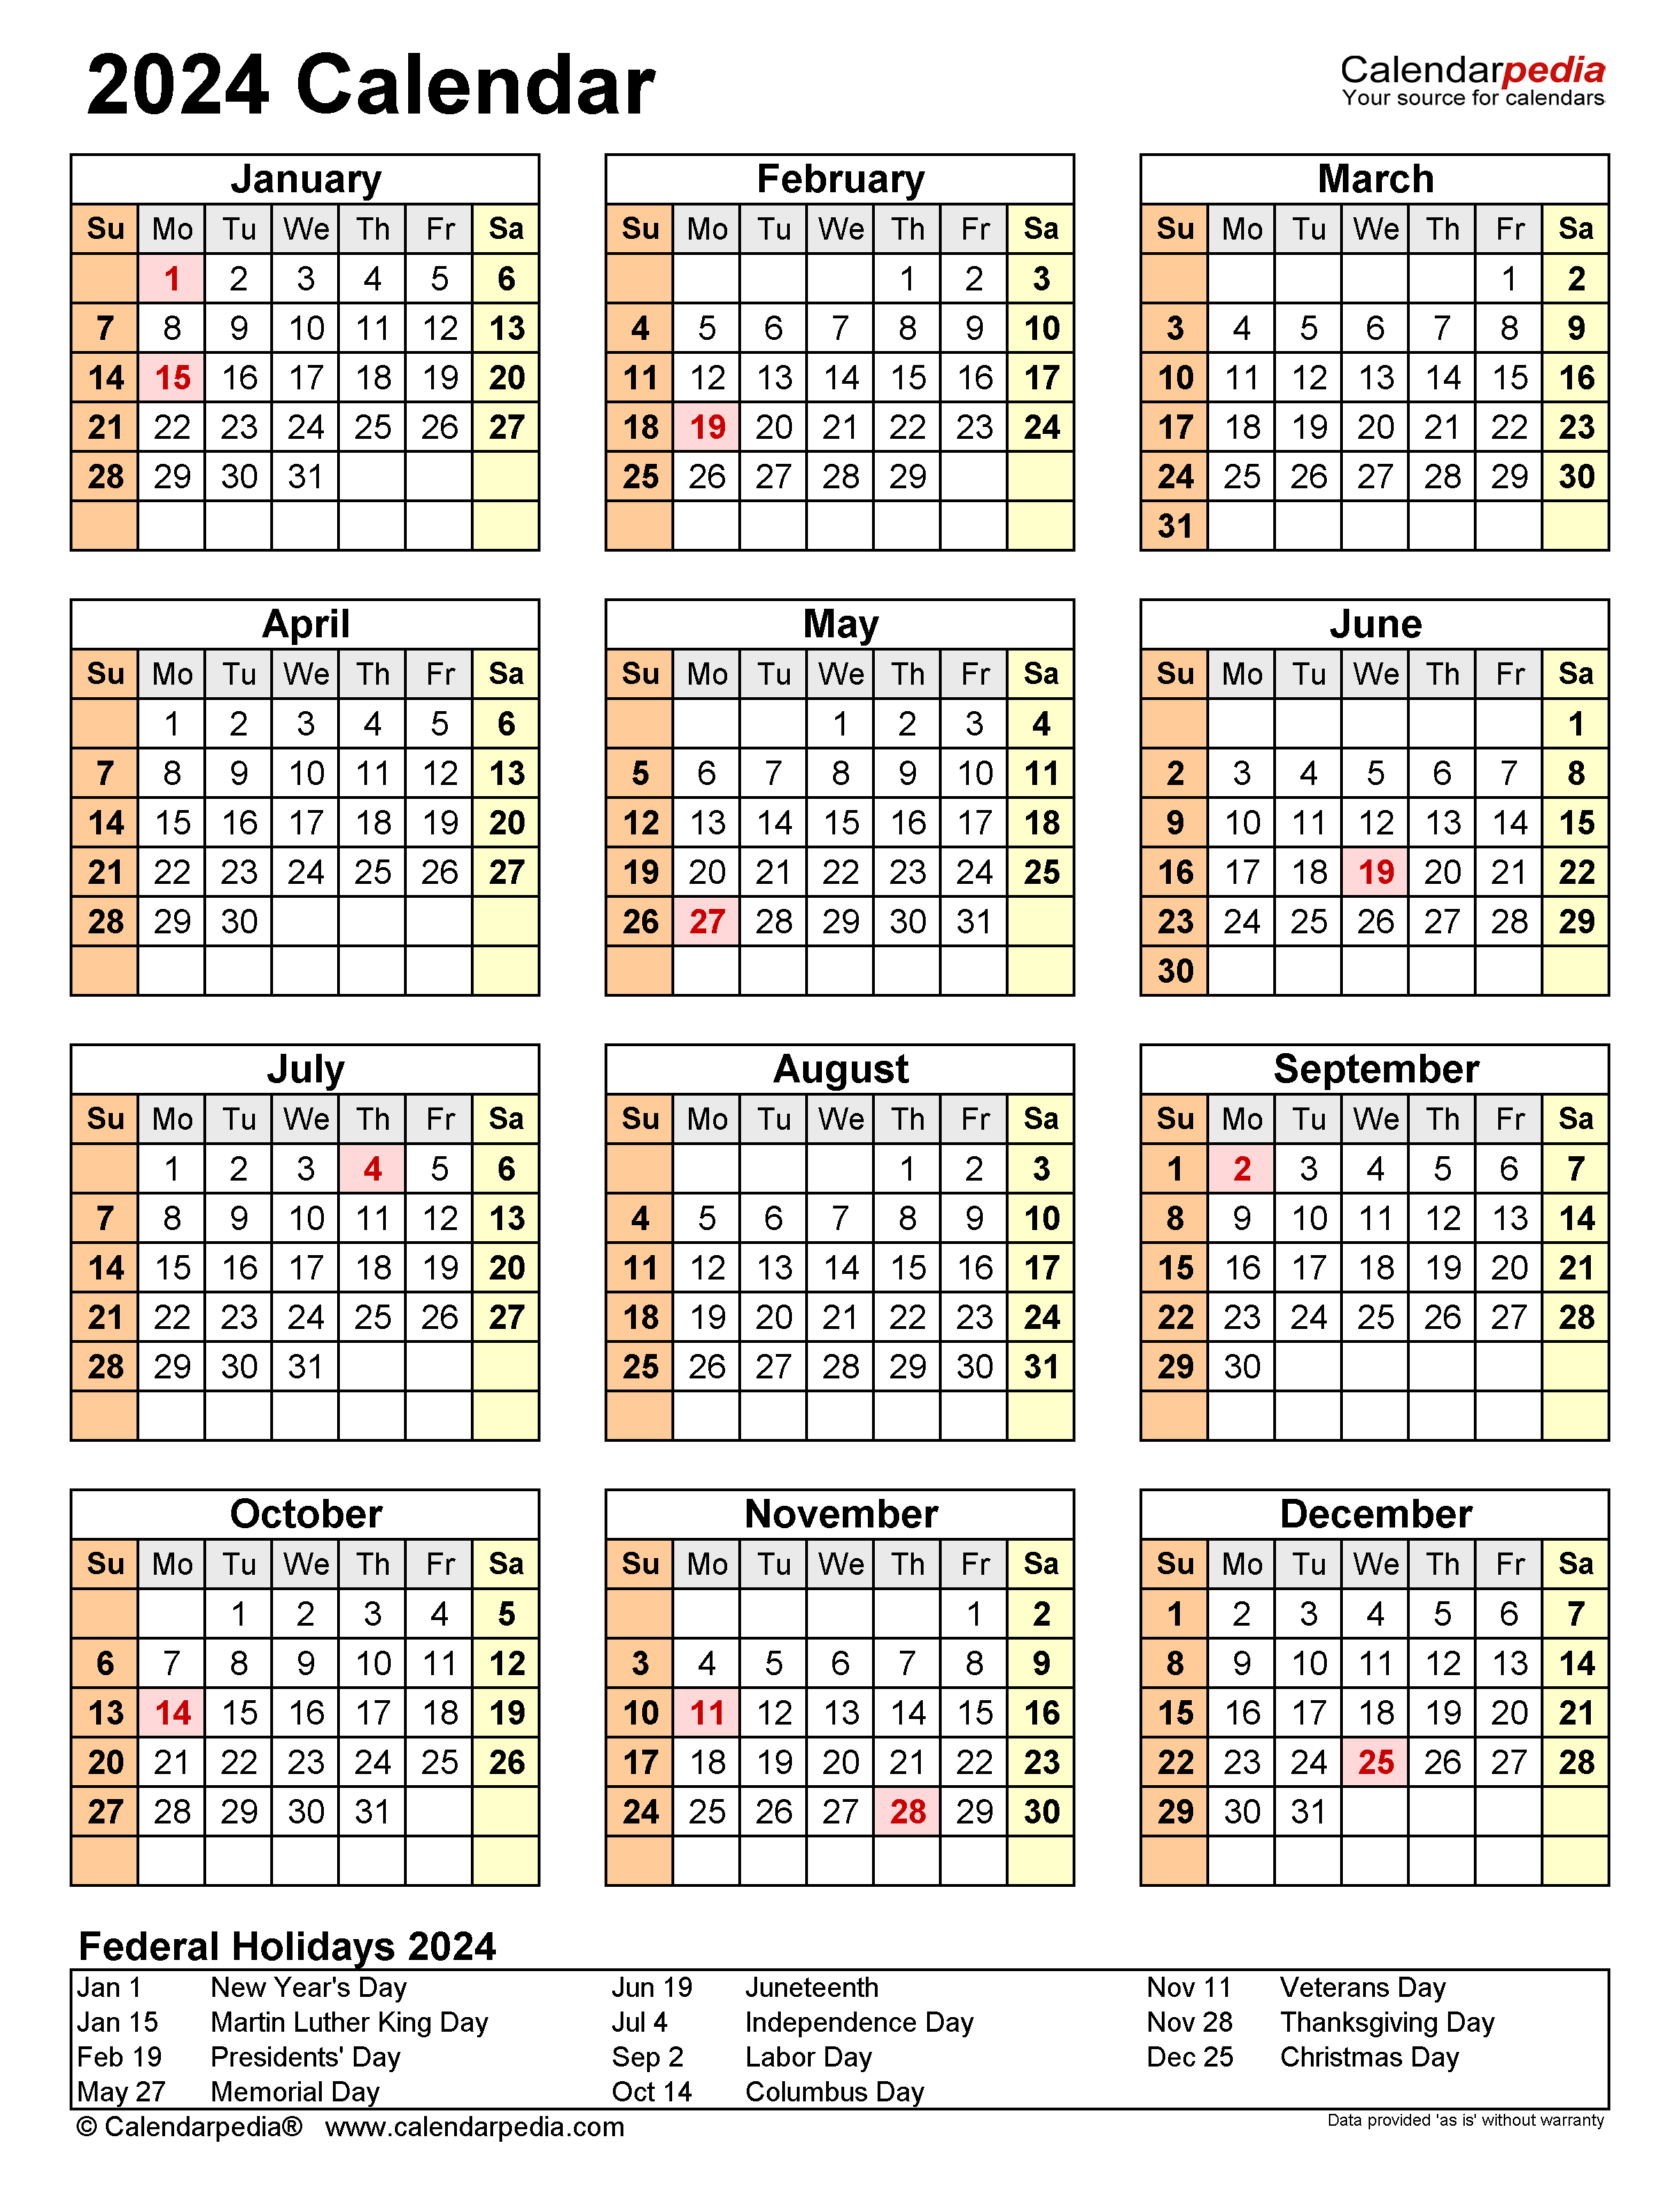 Free Printable 2024 Calendar With Holidays Crownflourmills | Free Printable 2024 Calendar With Holidays Templates